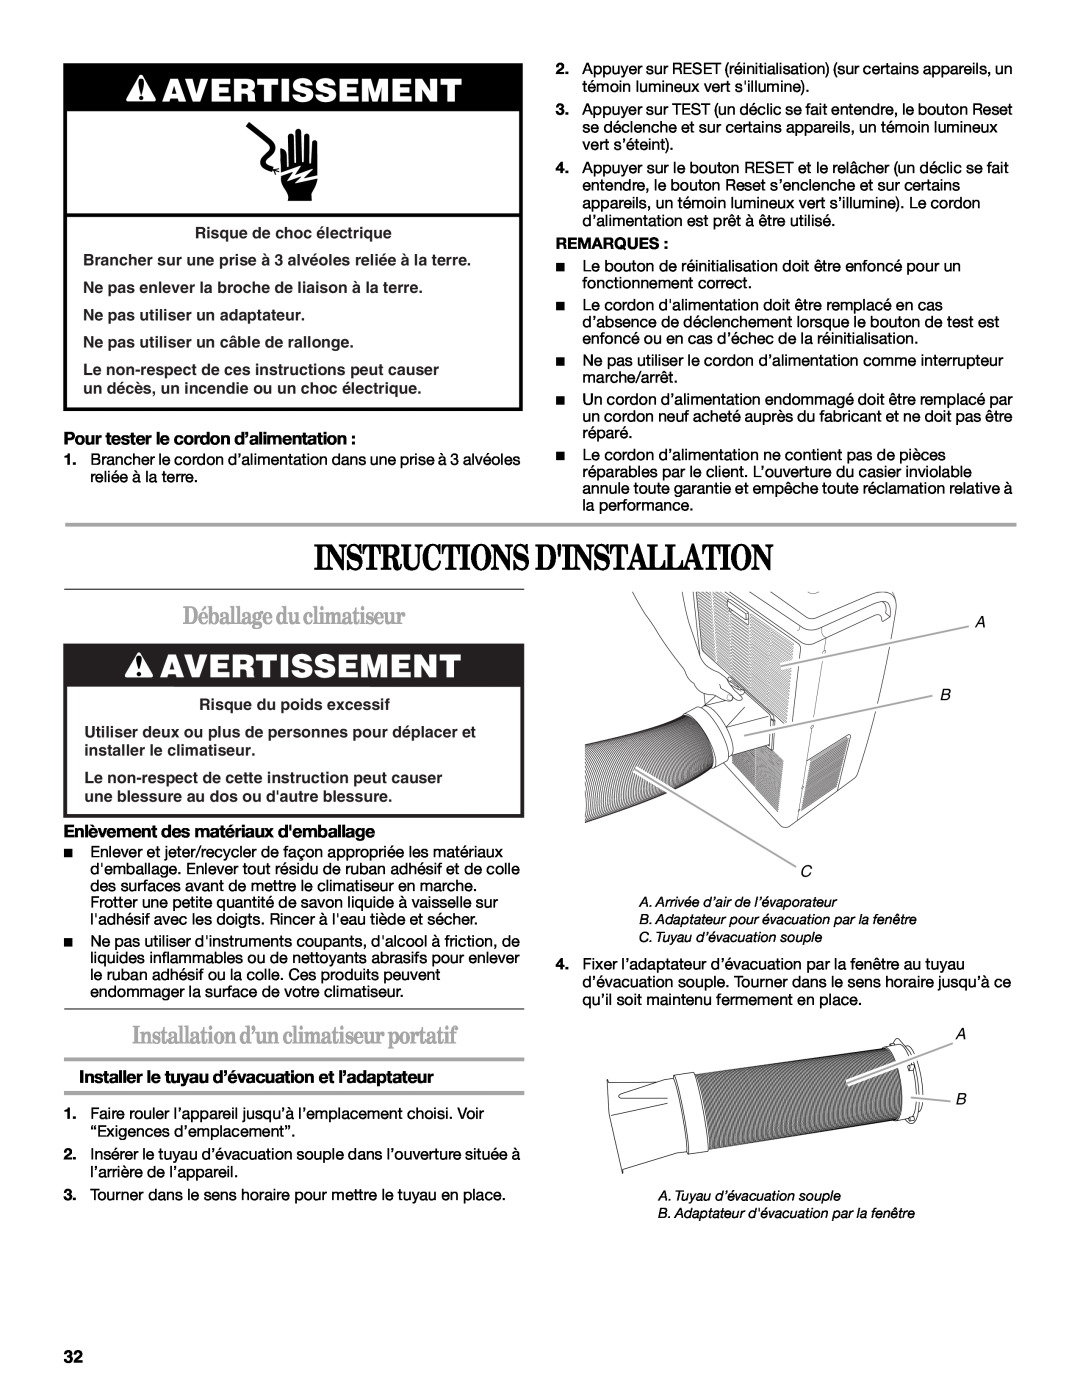 Whirlpool 1328891 Instructions Dinstallation, Déballageduclimatiseur, Installationd’unclimatiseurportatif, Avertissement 